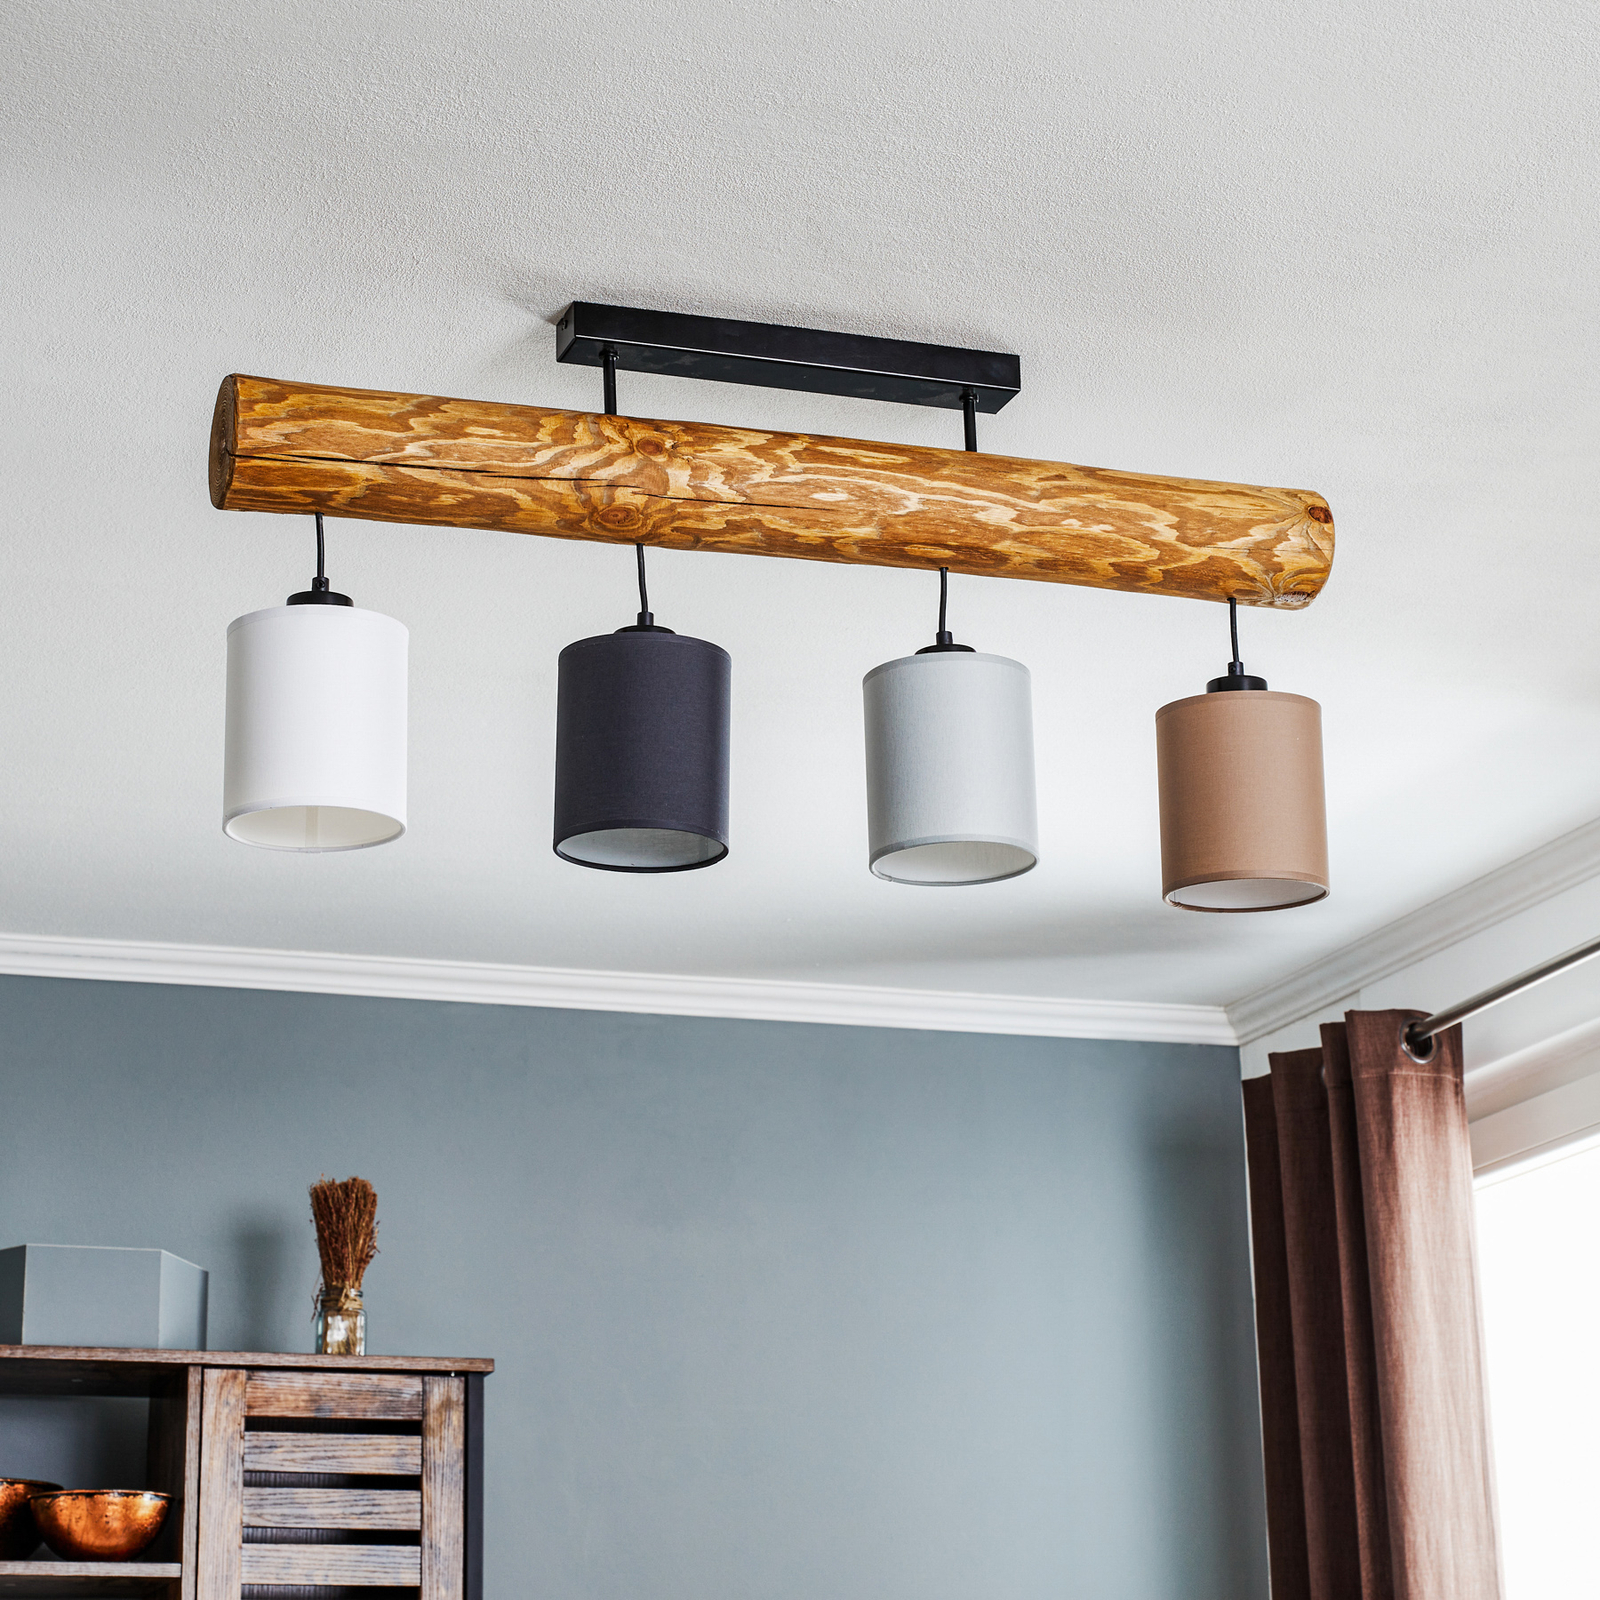 Plafondlamp Sachiko, houten balk, 4 stoffen kappen